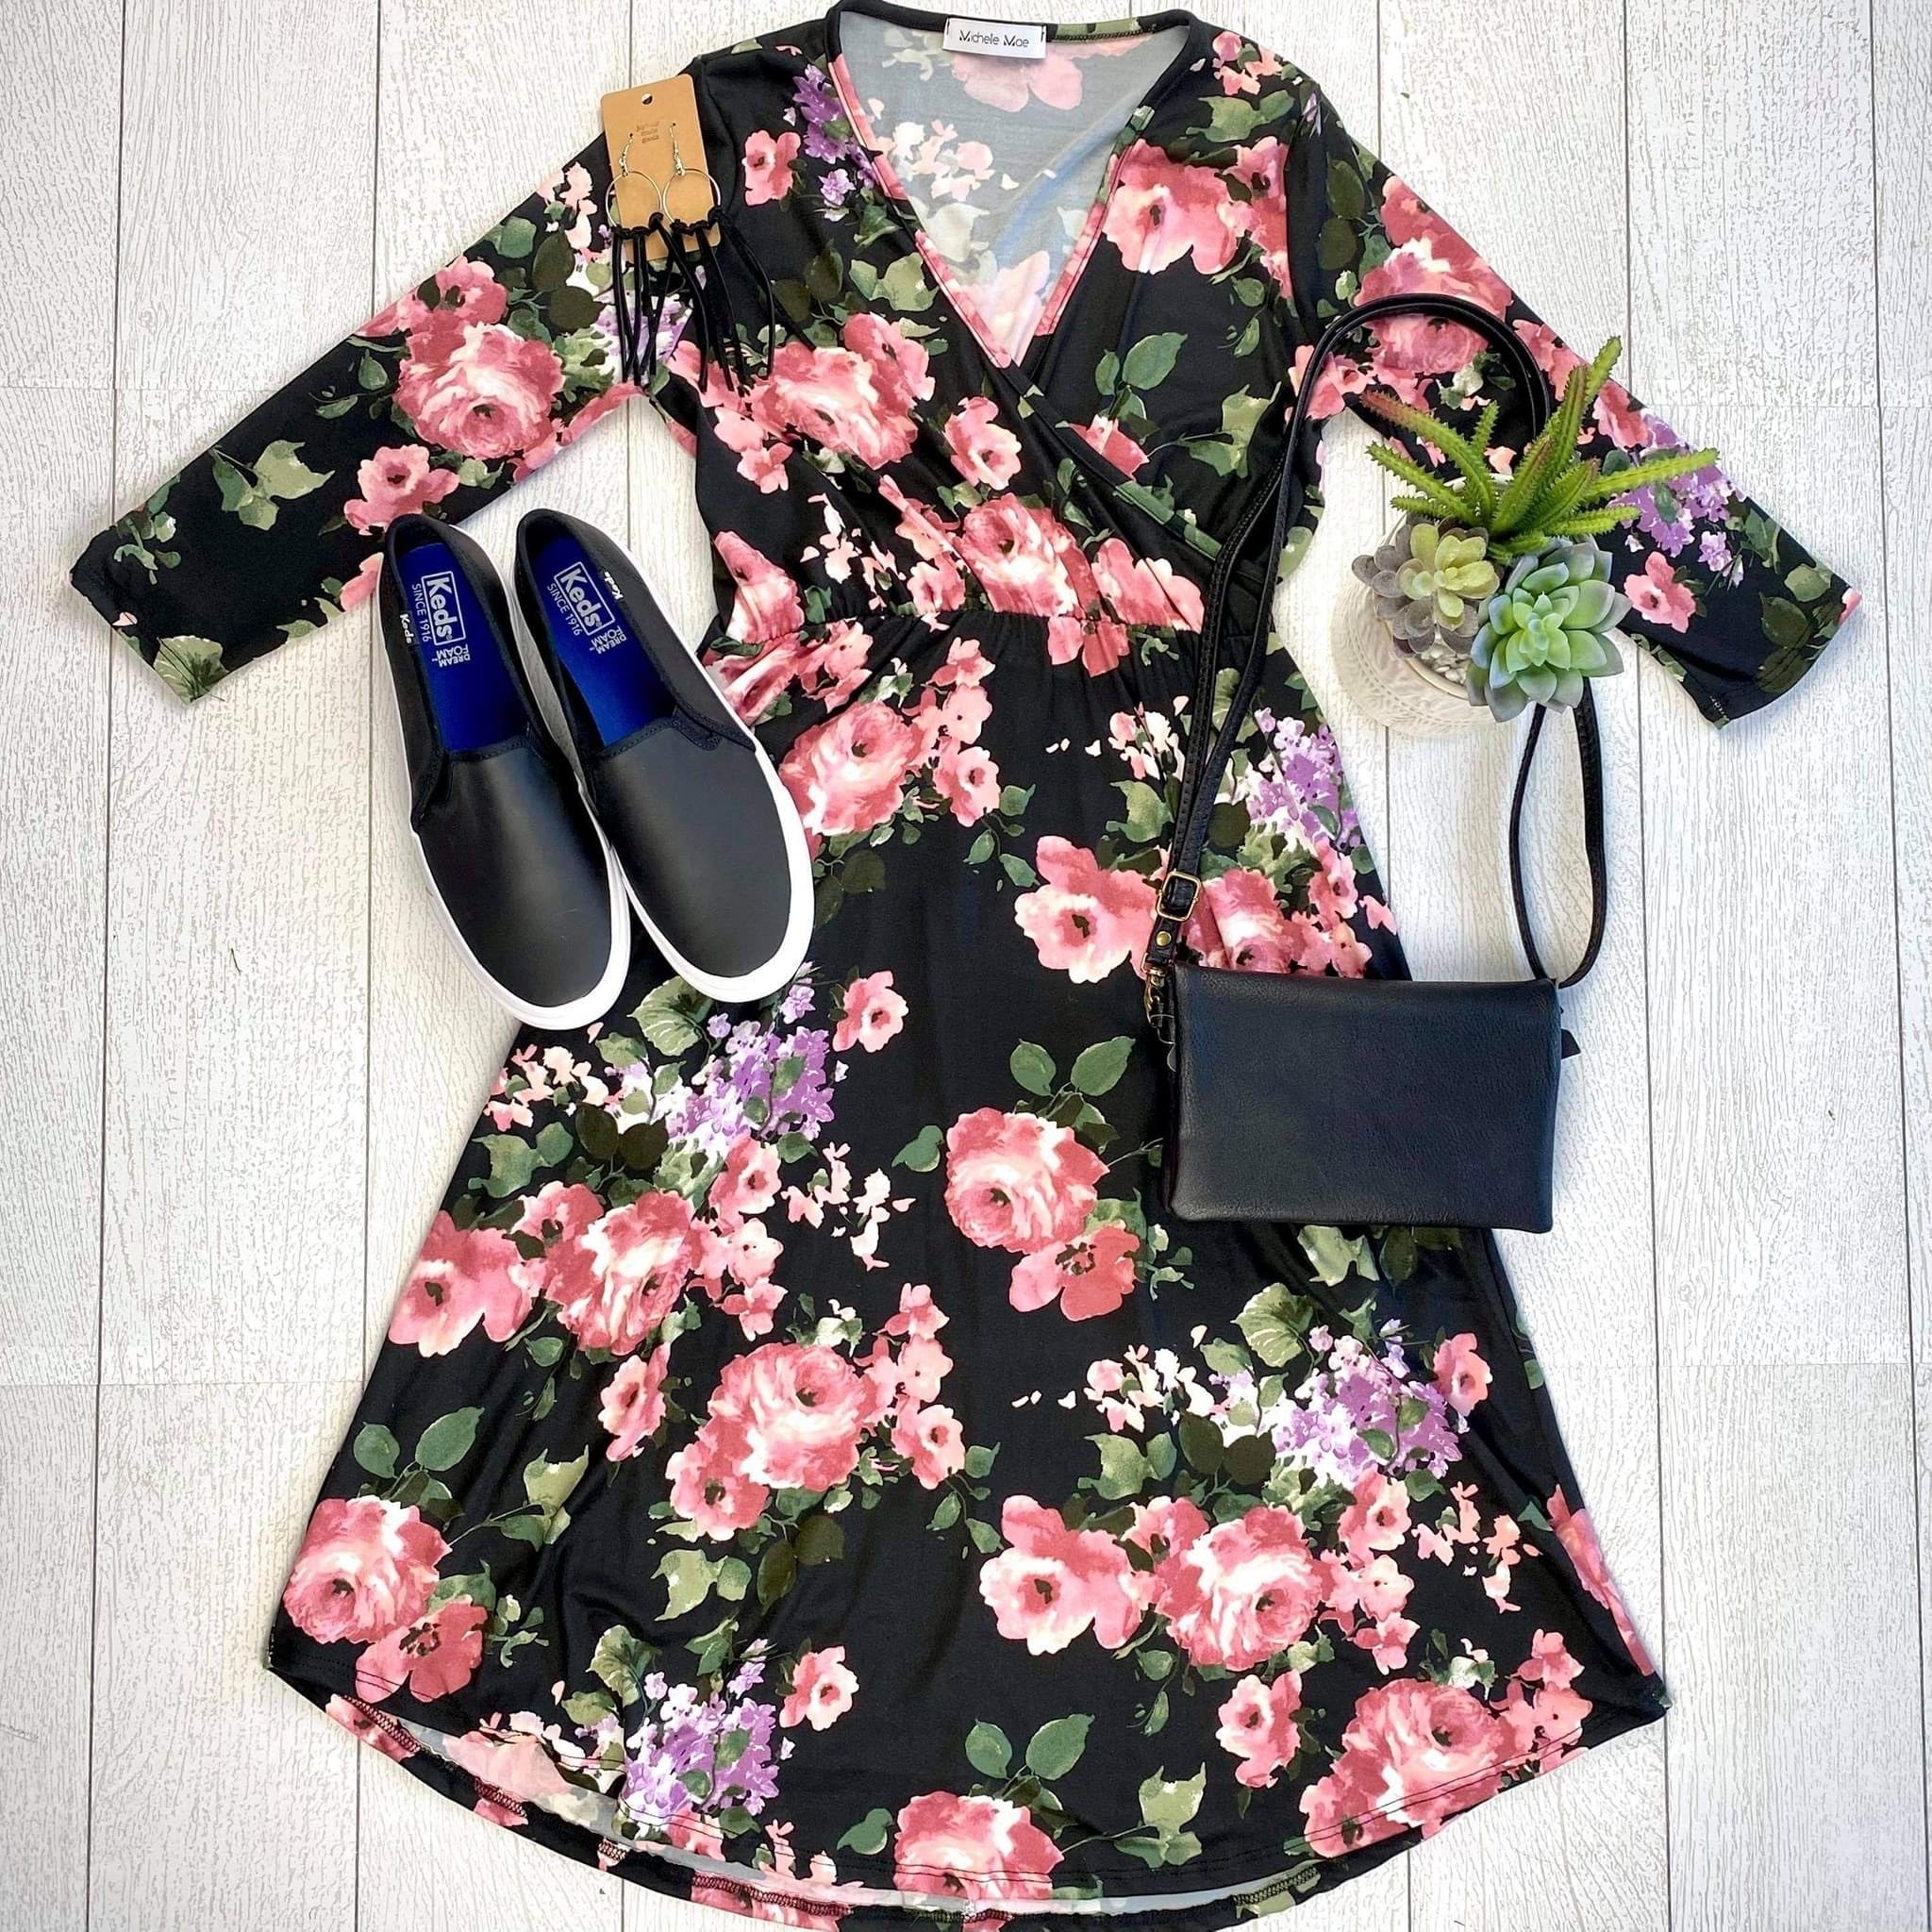 Taylor Dress - Black and Blush Floral